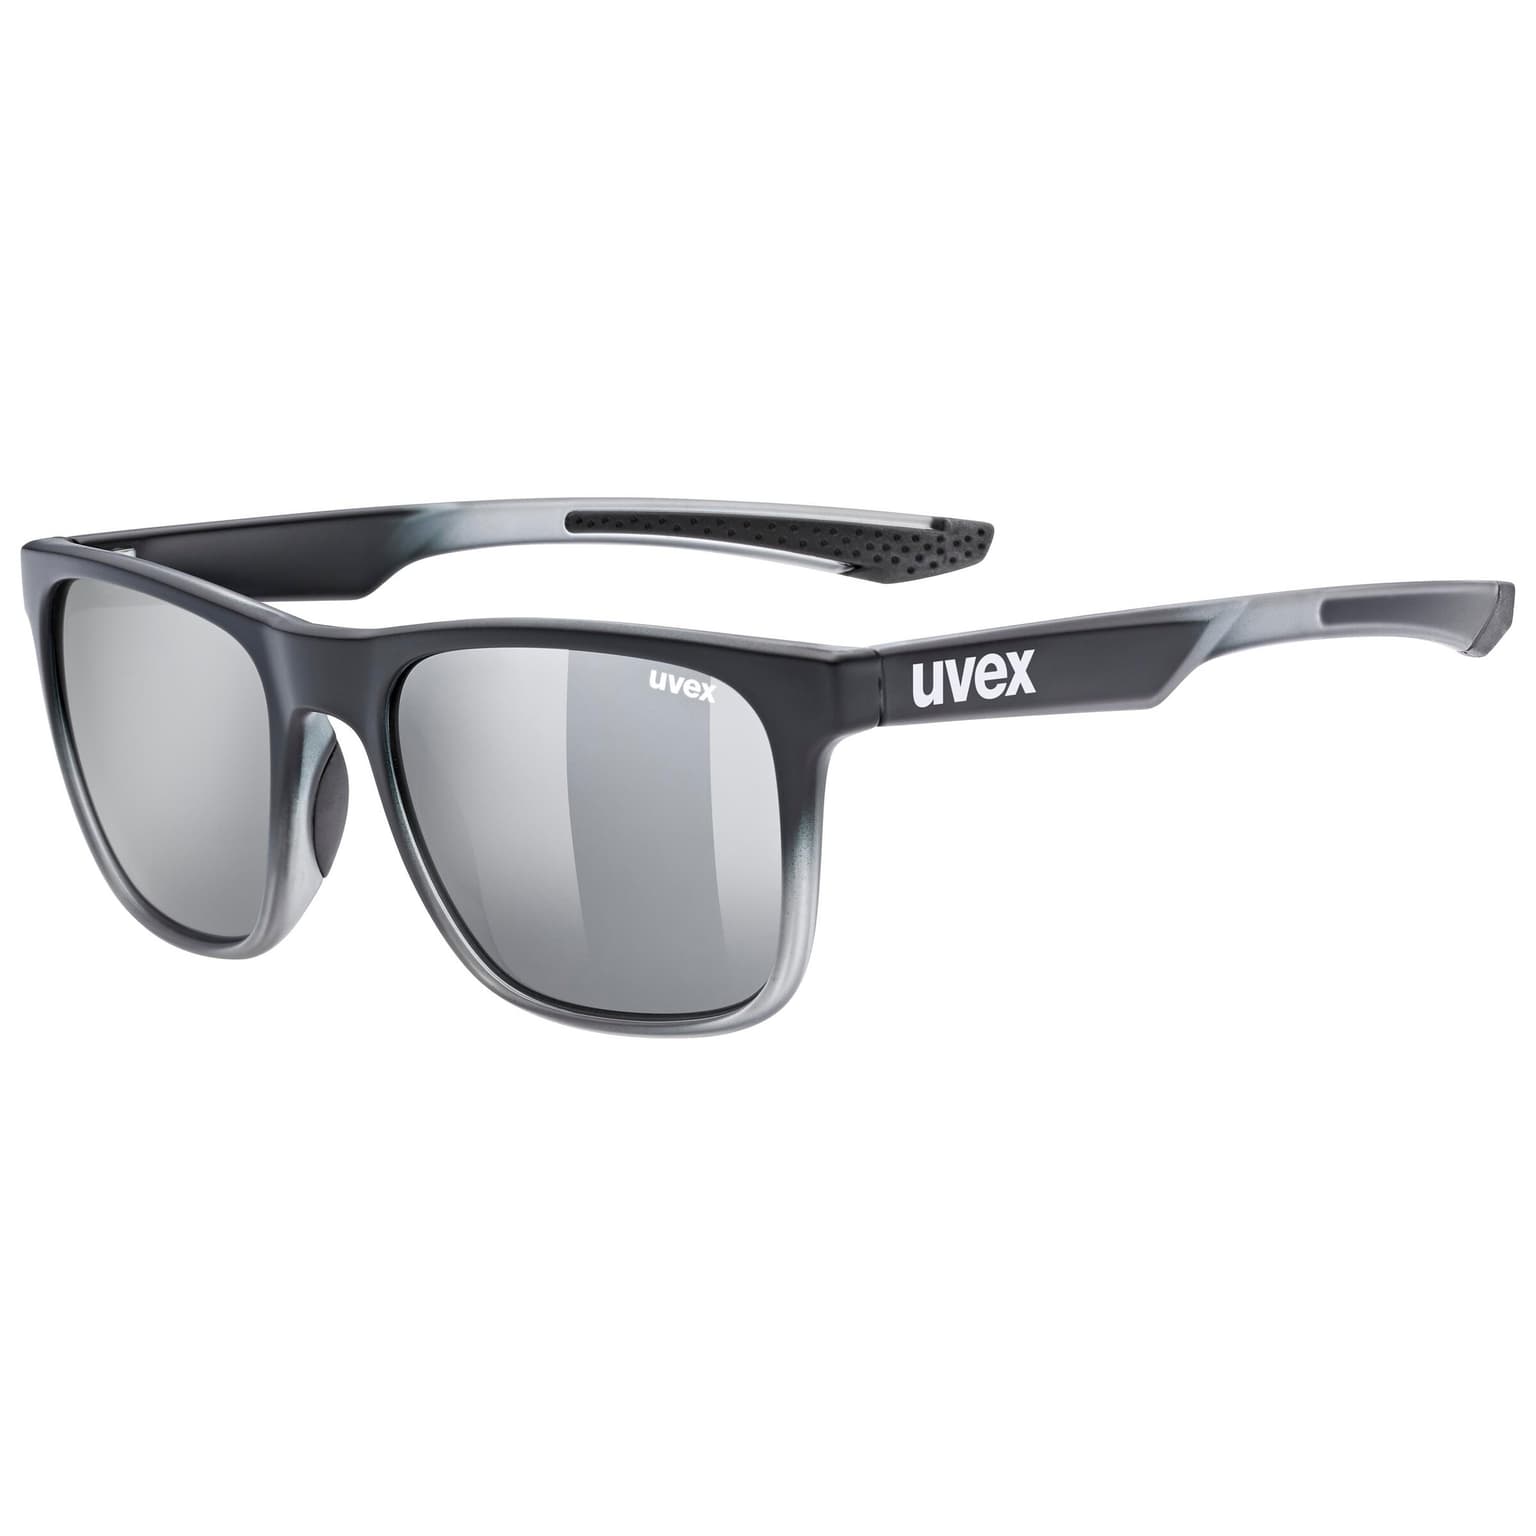 Uvex Uvex lgl 42 Sportbrille grau 1